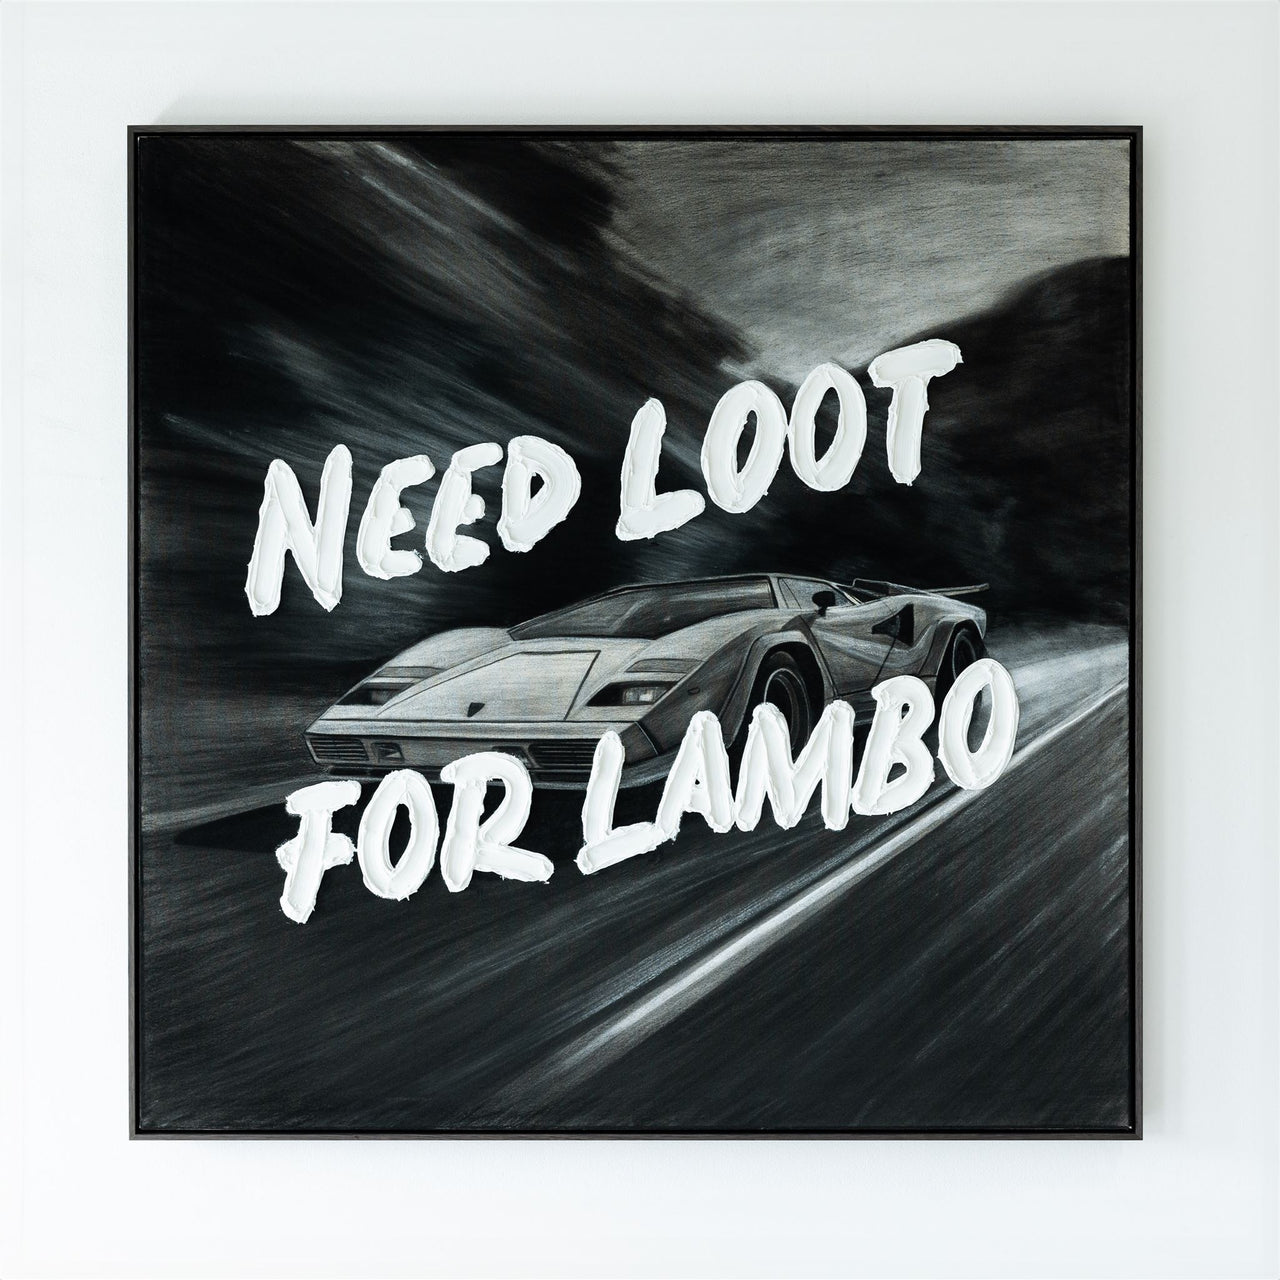 NEED LOOT FOR LAMBO